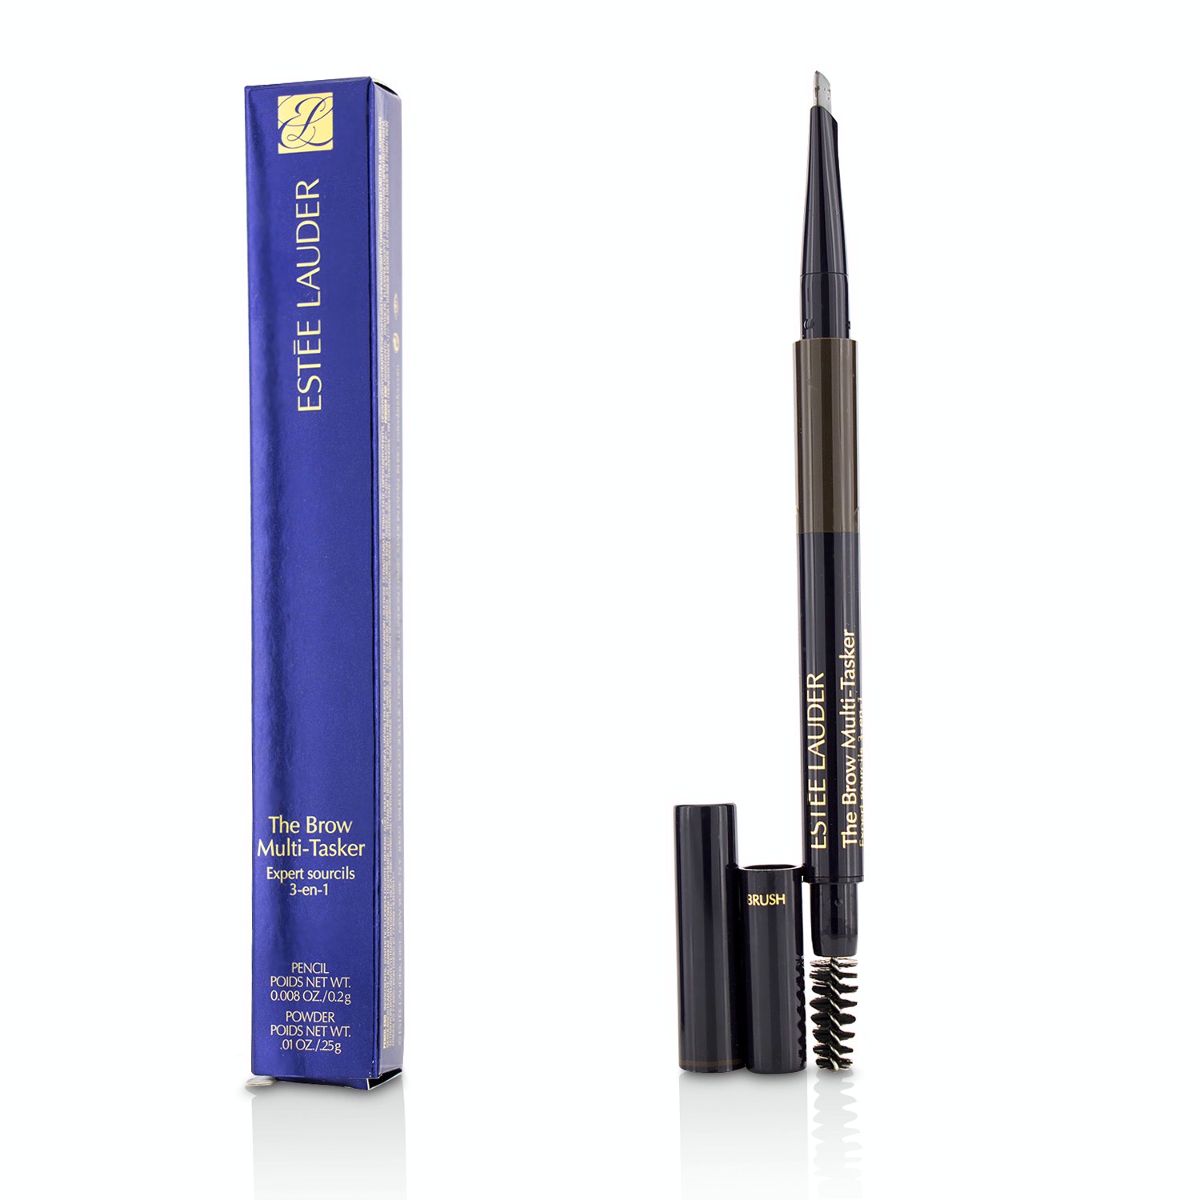 The Brow MultiTasker 3 in 1 (Brow Pencil Powder and Brush) - # 04 Dark Brunette Estee Lauder Image